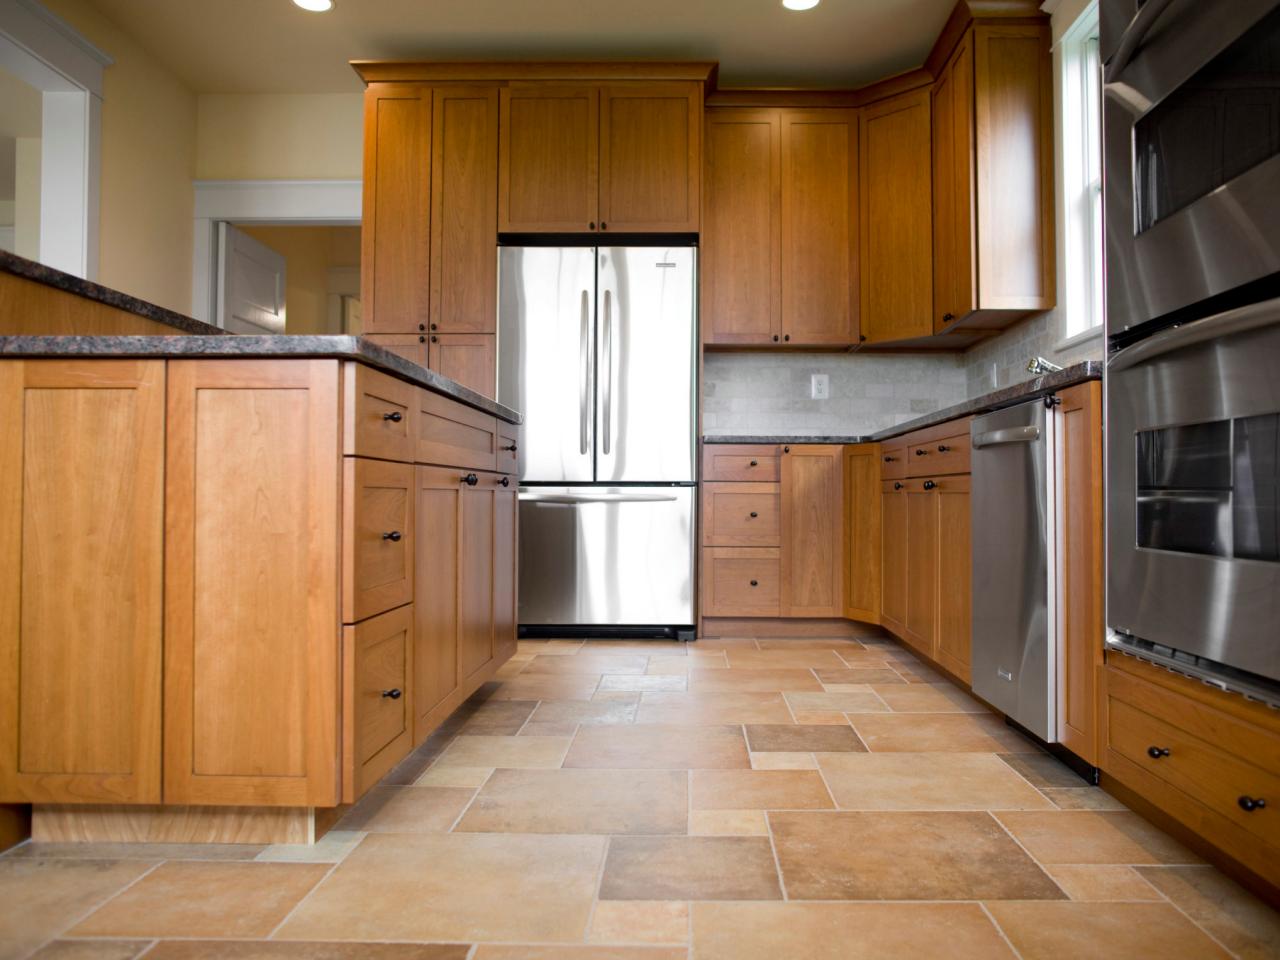 kitchen flooring options related to: kitchen flooring flooring kitchens LNNJUHS